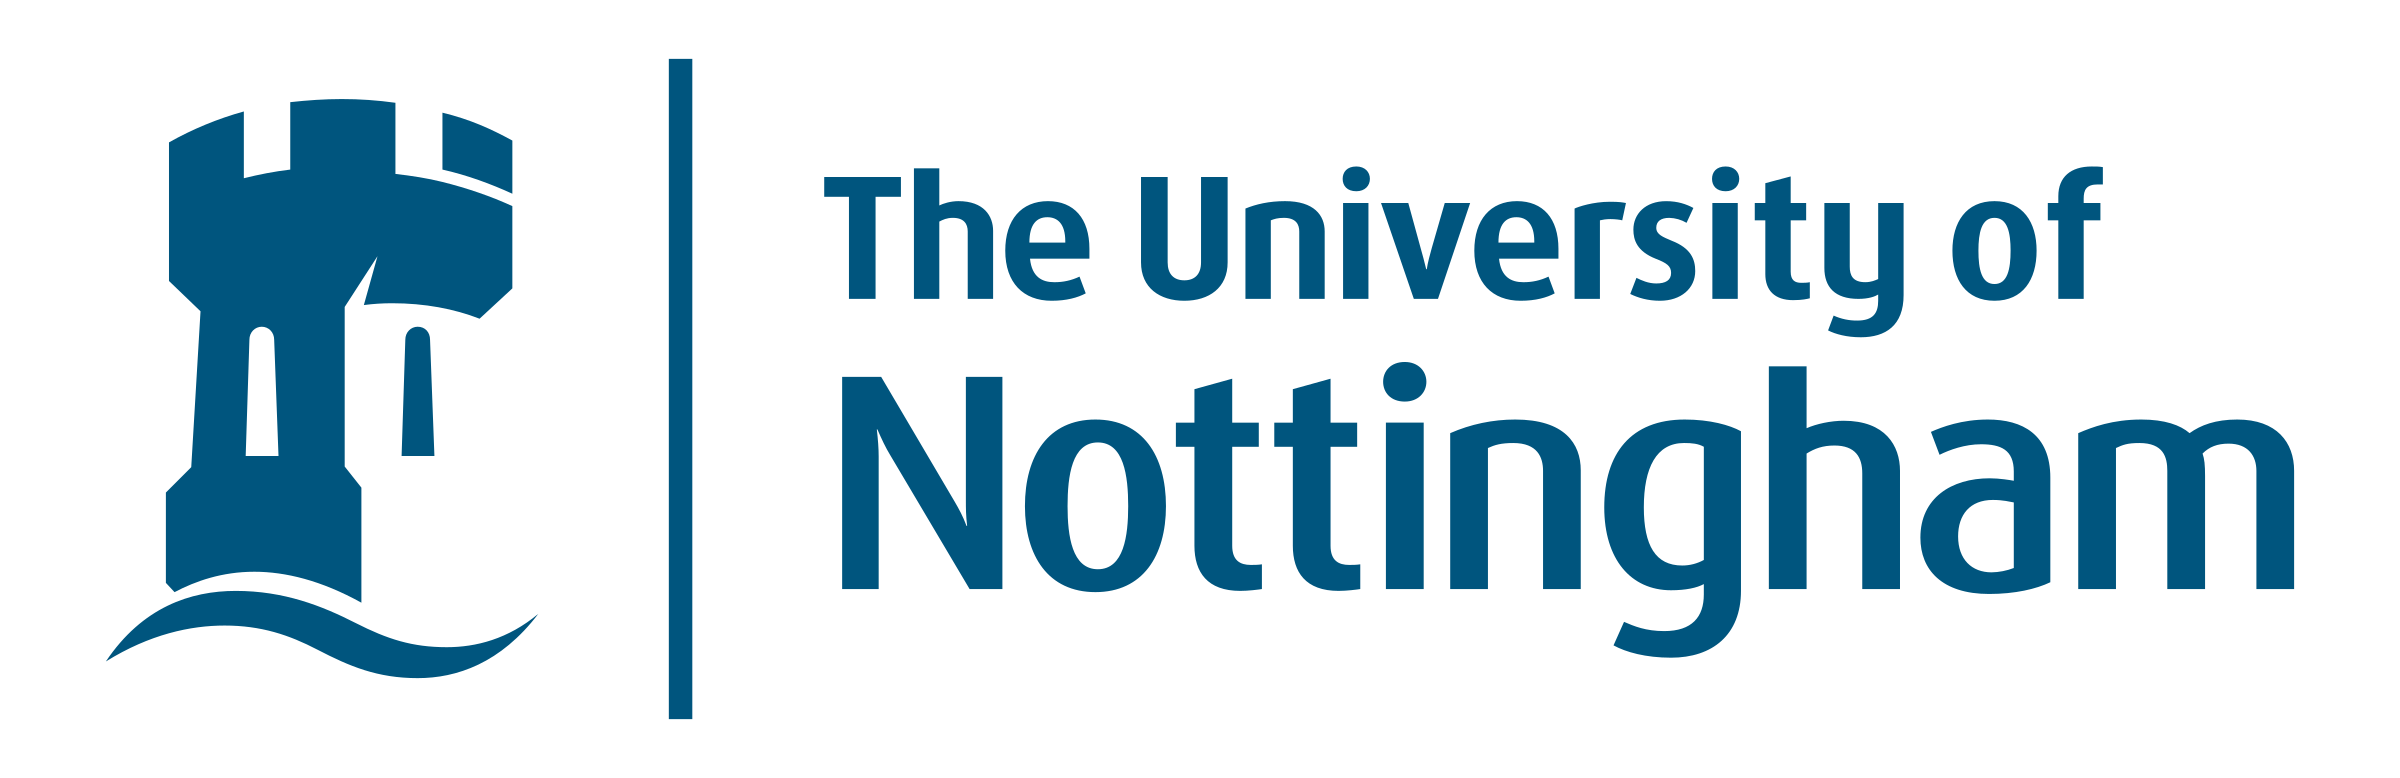 University of Nottingham company logo